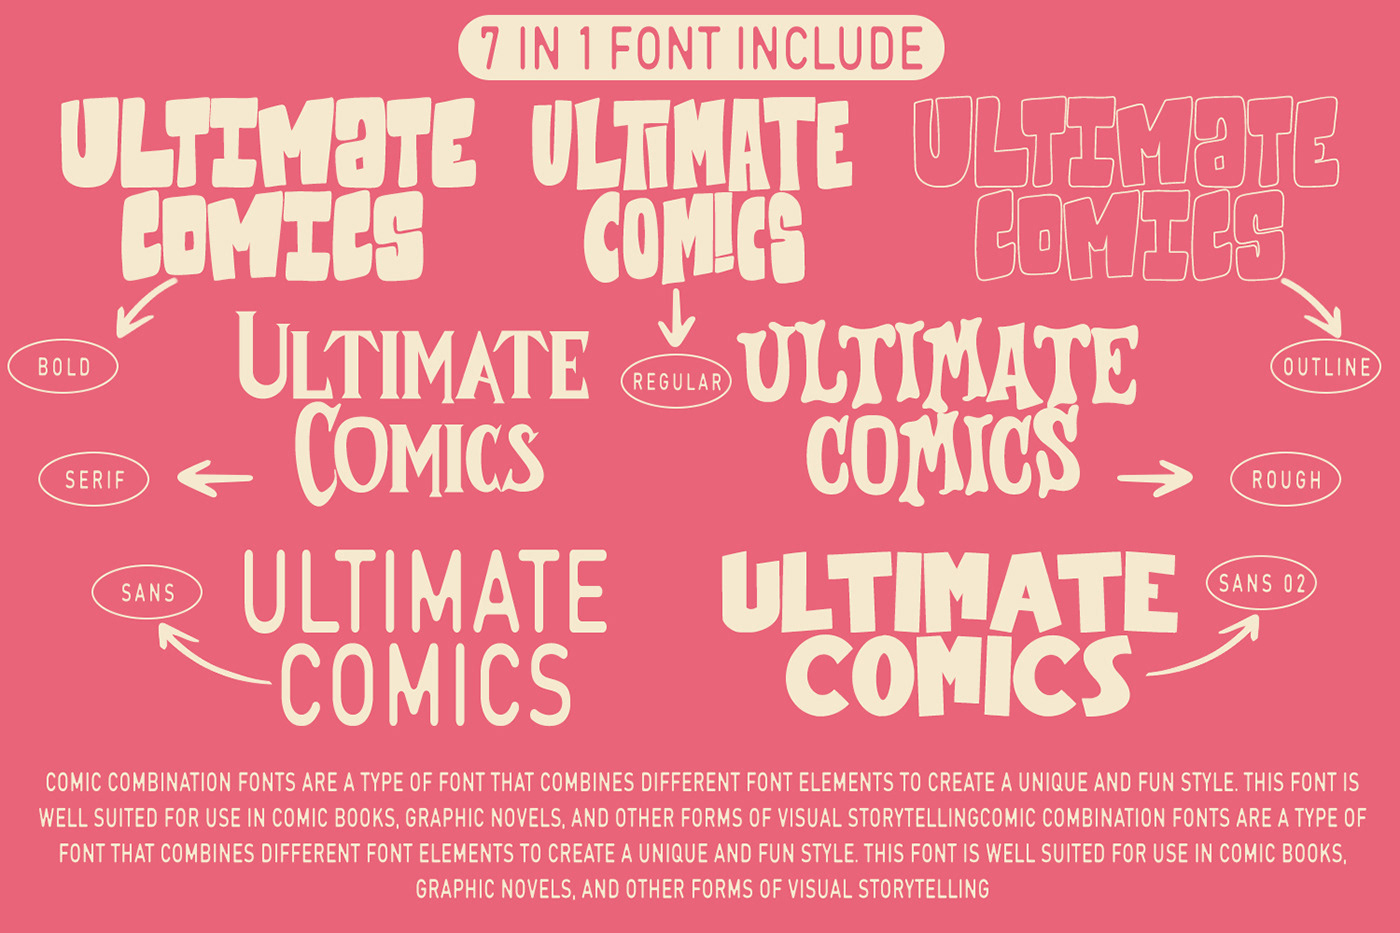 Free font free fonts free typeface freebie font Display Typeface type design display font typeface design